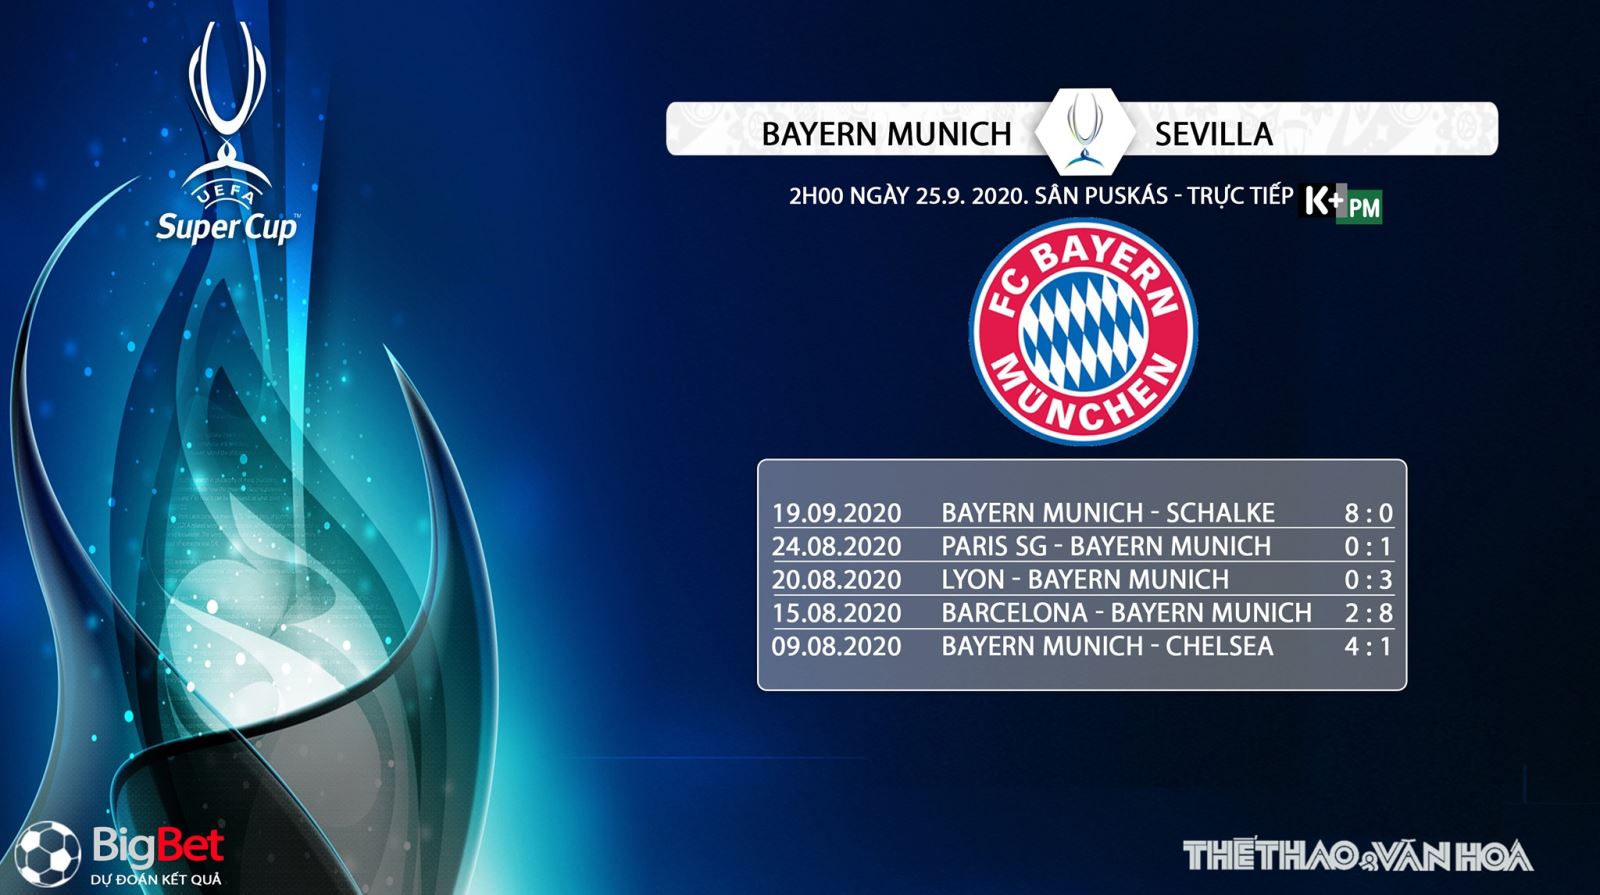 Bayern Munich vs Sevilla, Bayern Munich, Sevilla, soi kèo, trực tiếp bóng đá, soi kèo Bayern Munich vs Sevilla, kèo bóng đá Bayern Munich vs Sevilla, kèo thơm